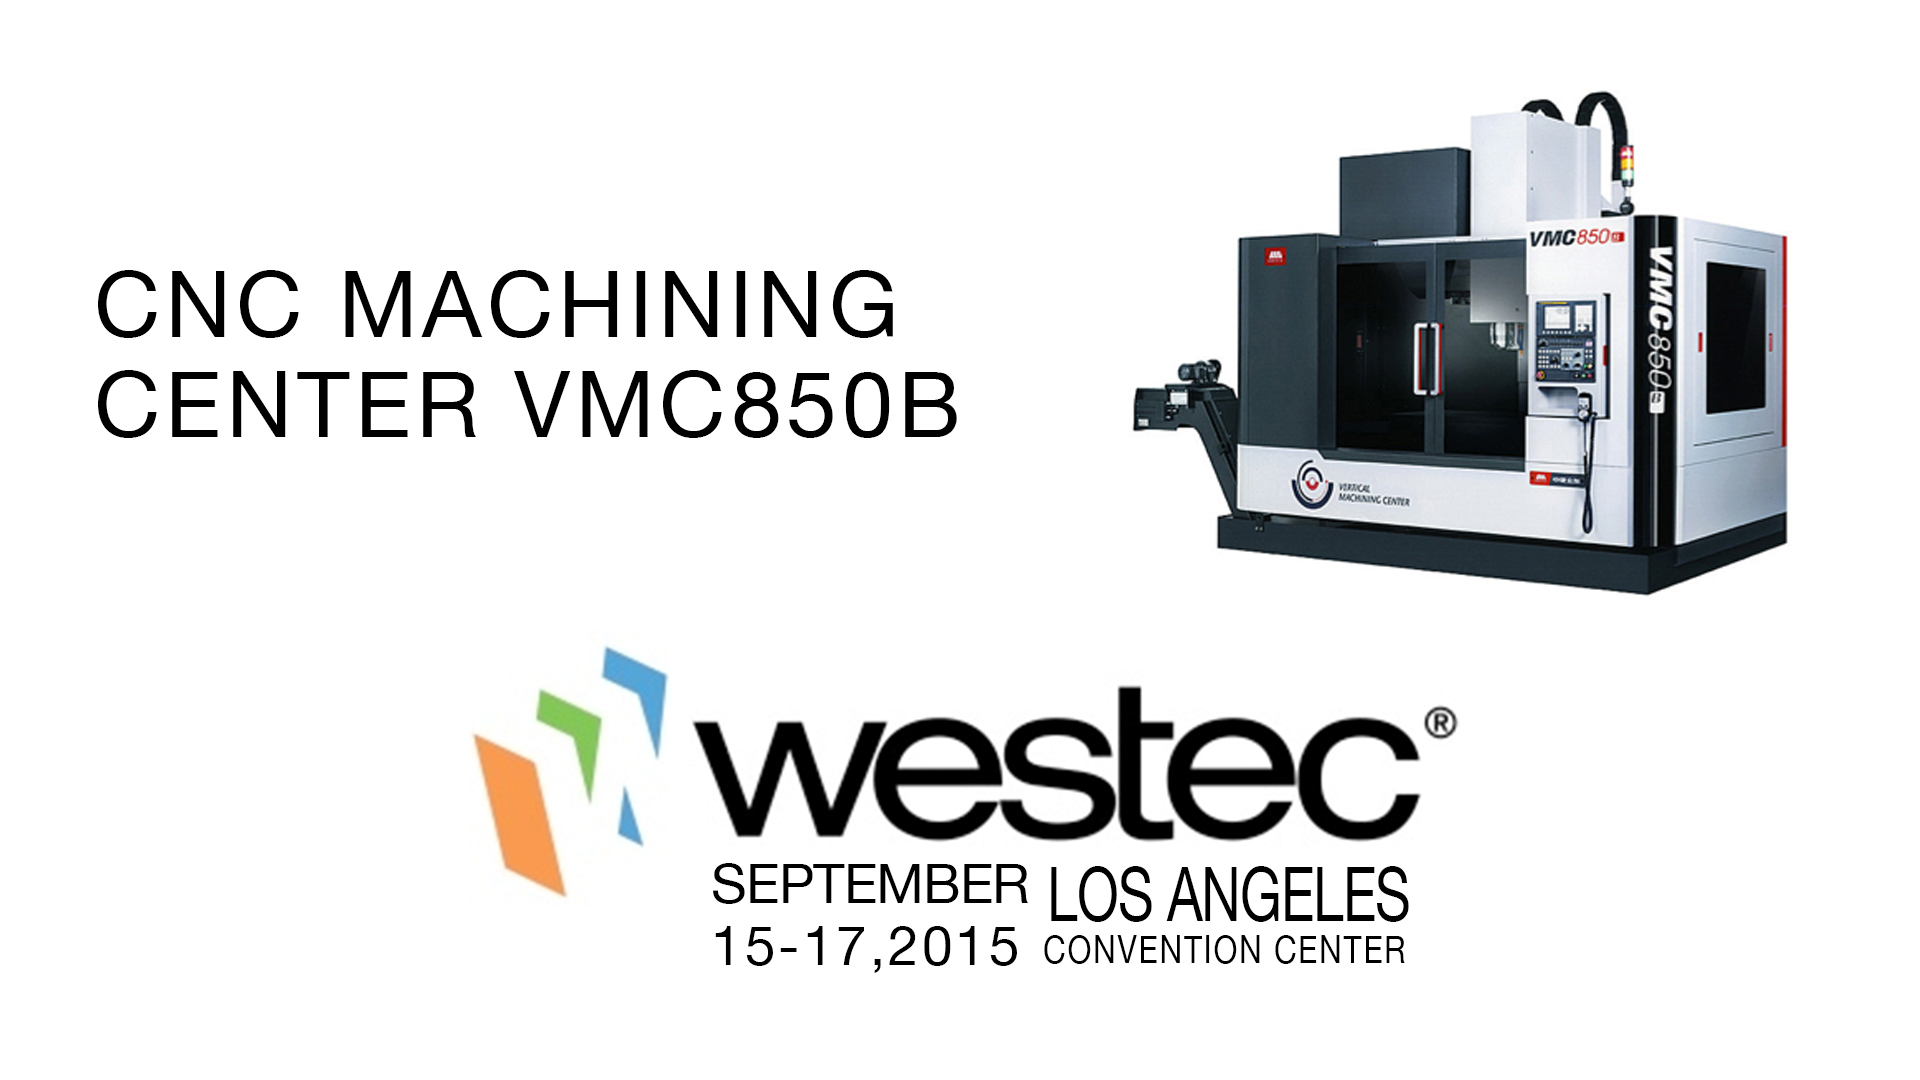 CNC MACHINING CENTER SMTCL VMC850B WESTEC 2015